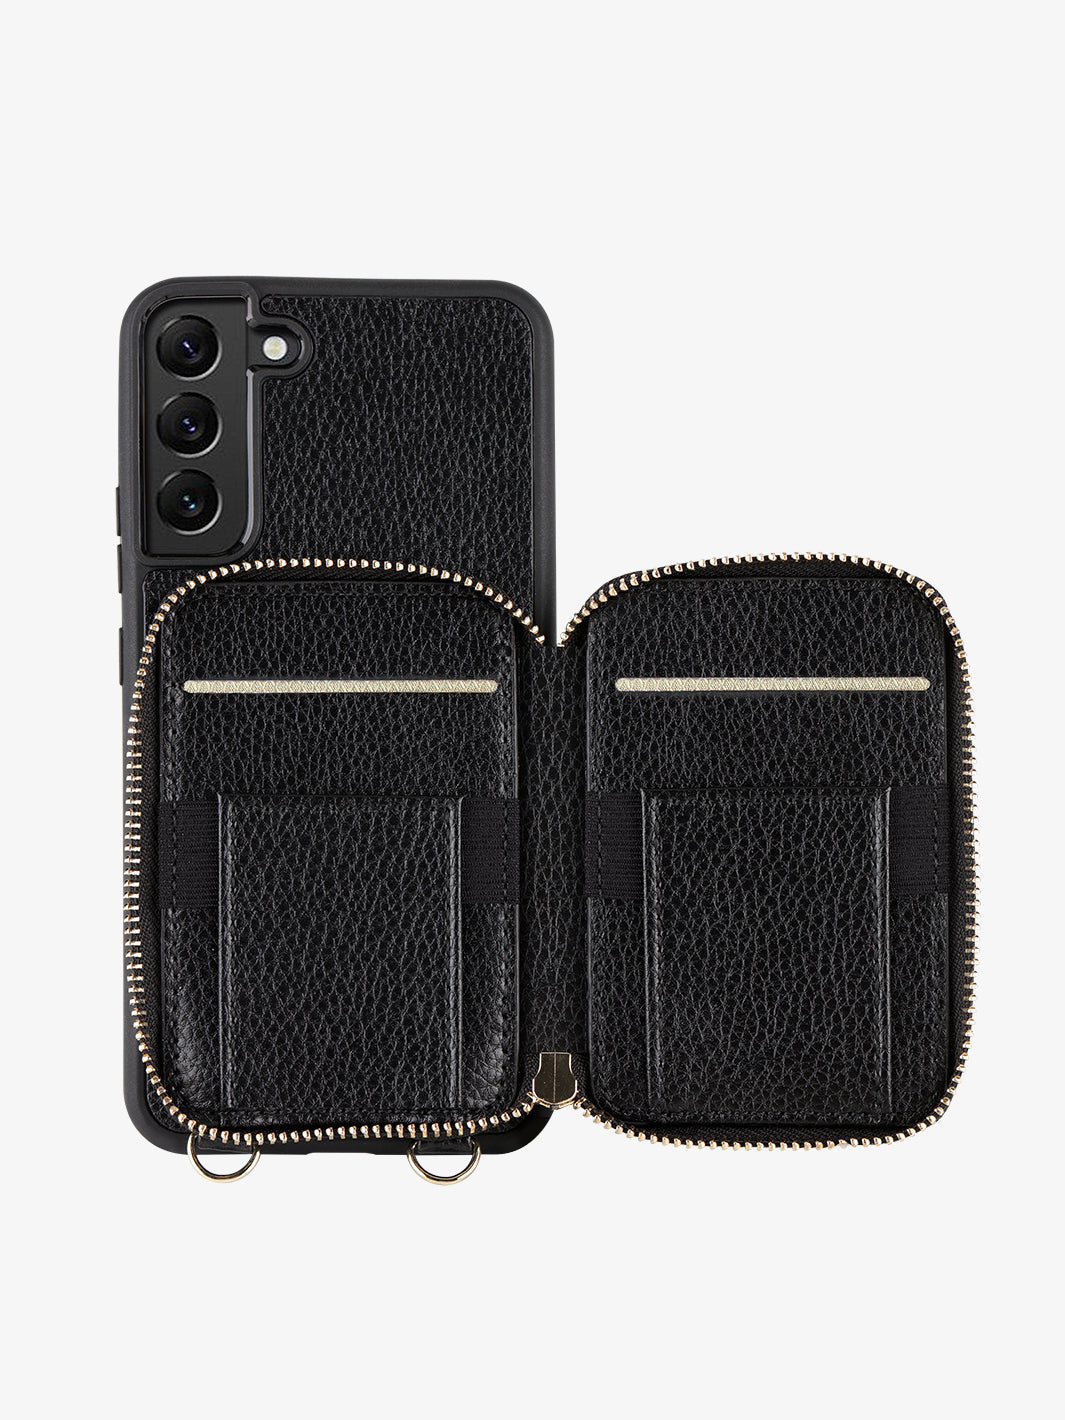 Custype samsung galaxy s22 plus phone case wallet phone cover in black